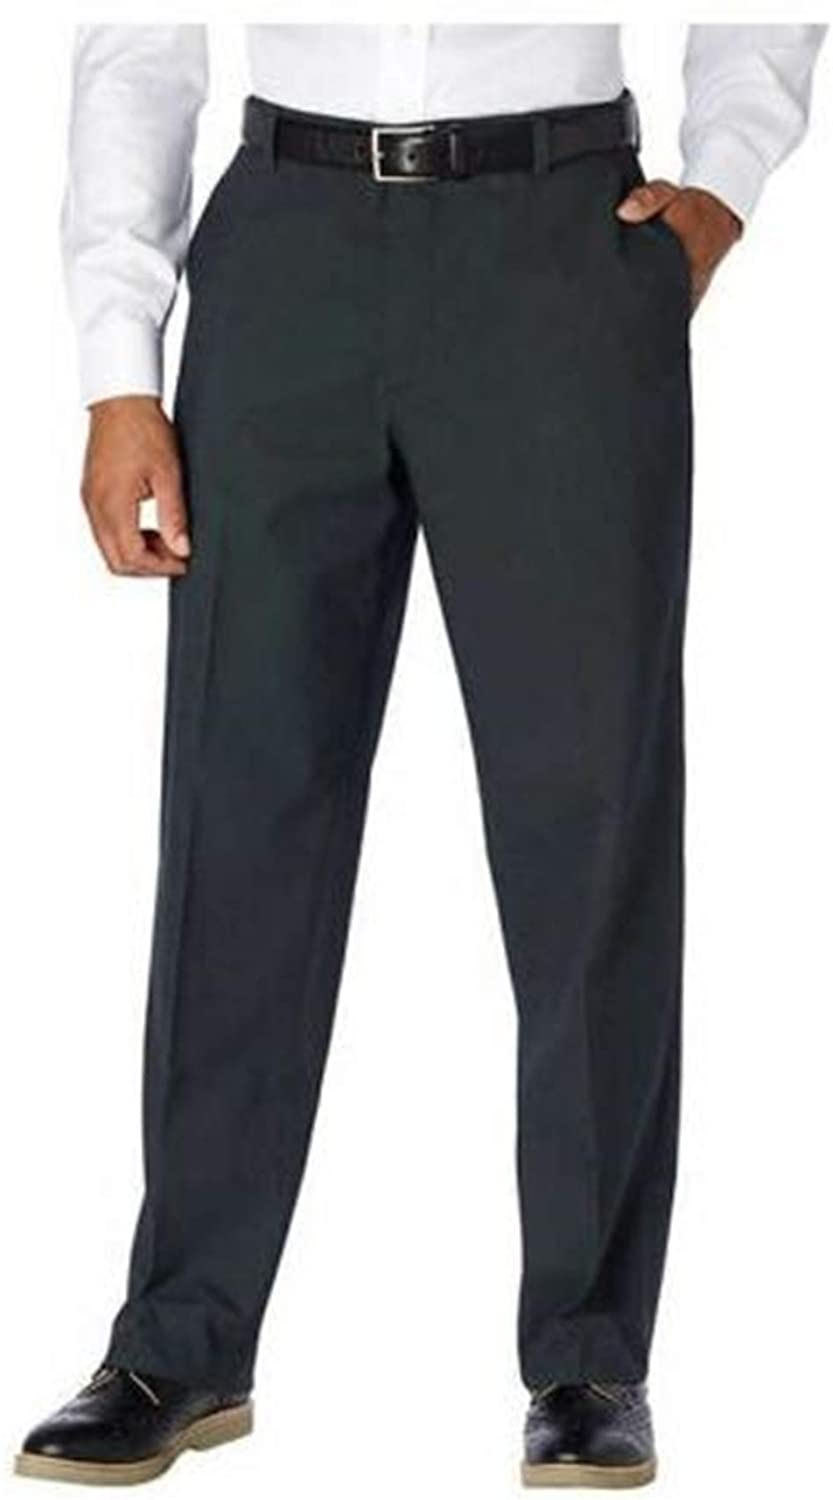 Kirkland Signature Men's Non-Iron Comfort Pant (32x30, Black Check) | eBay